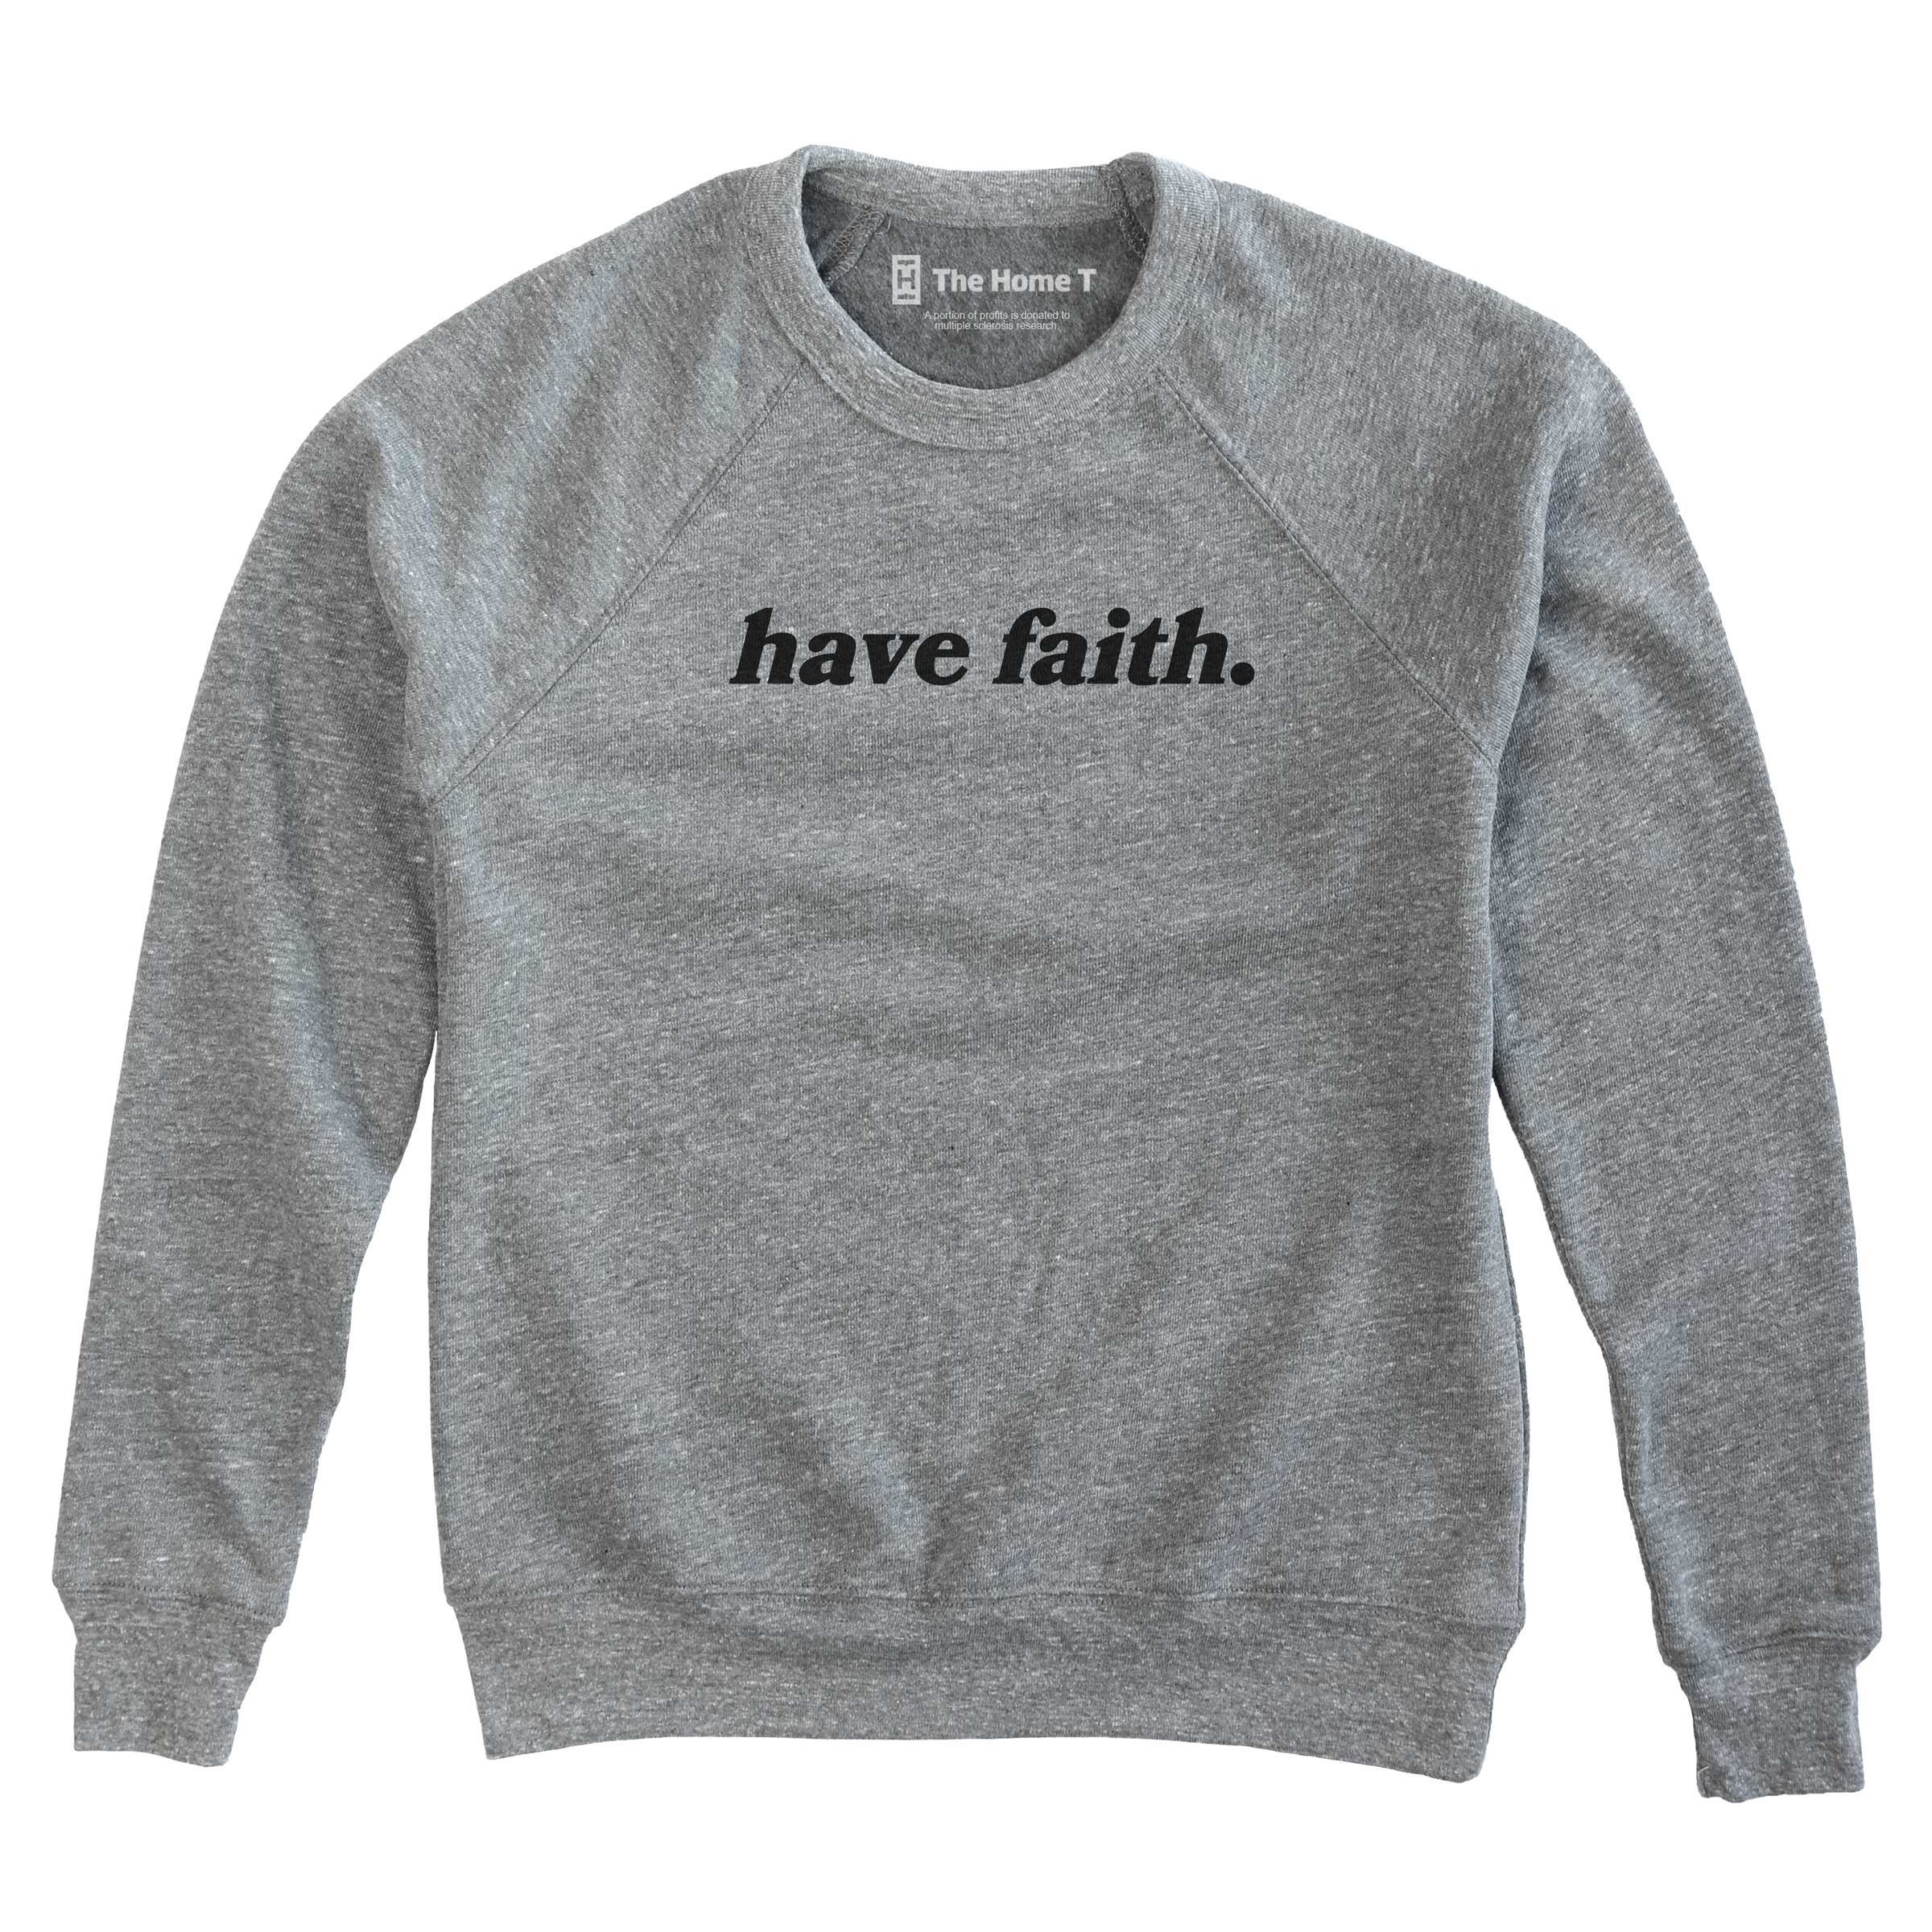 Have Faith. The Home T XS SWEATSHIRT